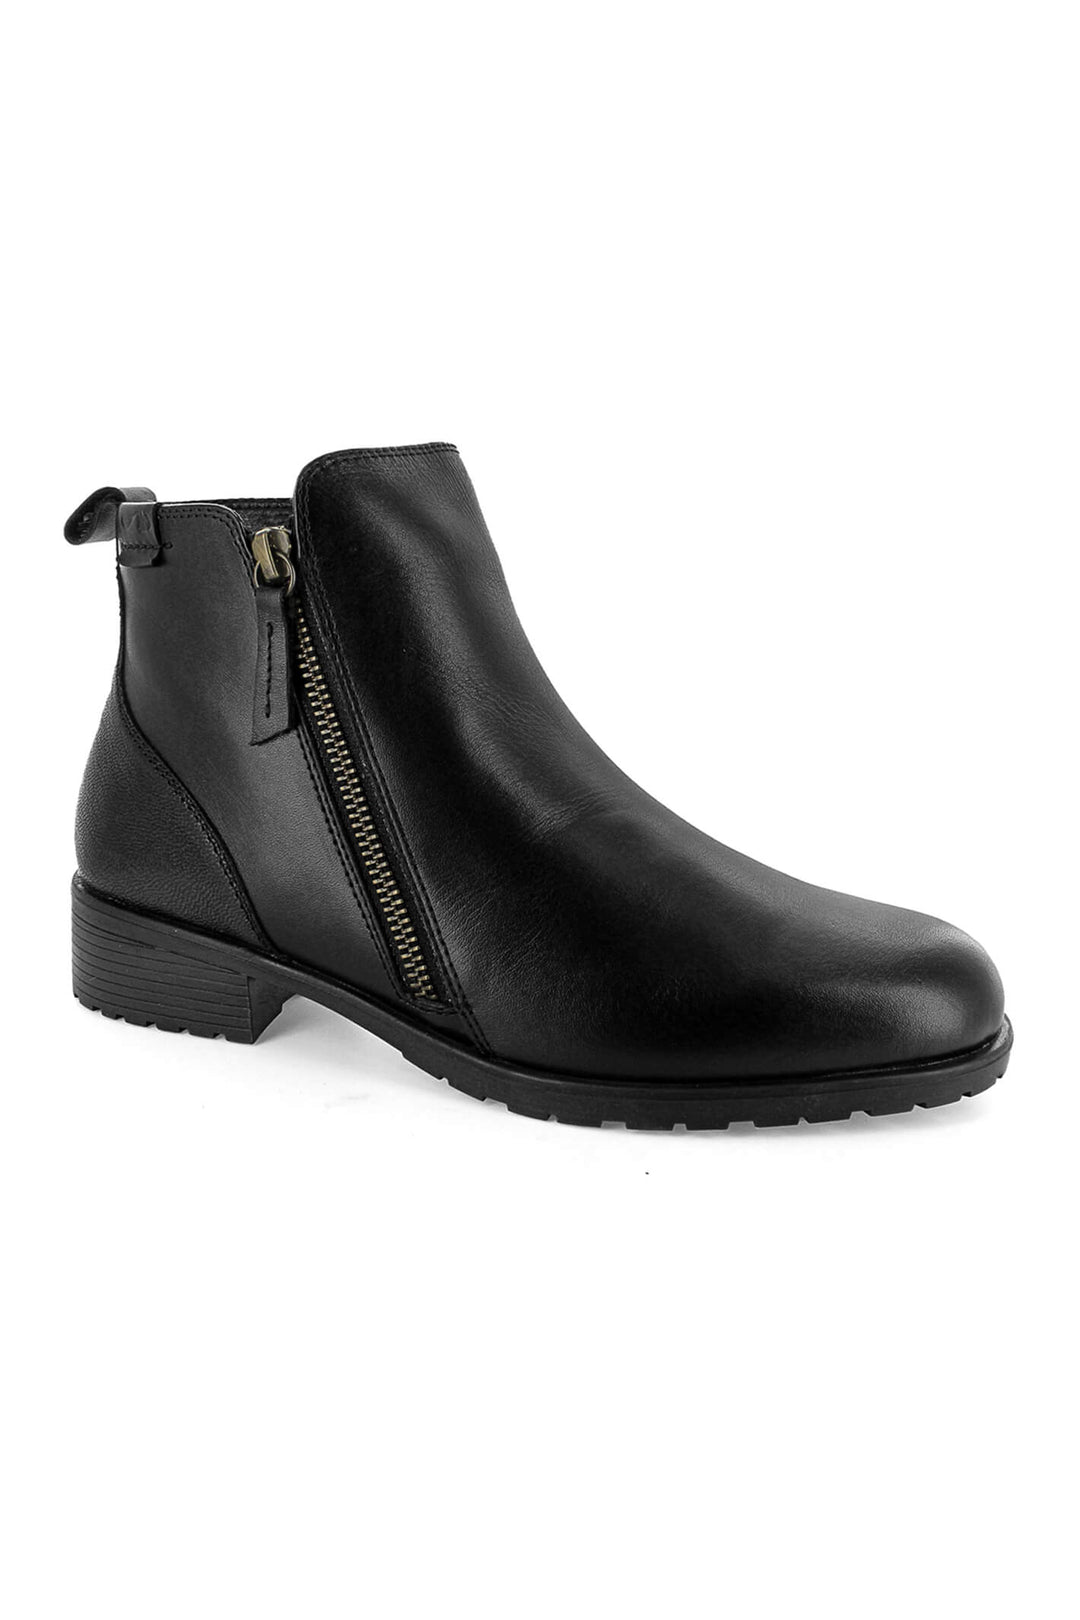 Strive Sandringham Black Zip Leather Boots - Shirley Allum Boutique 